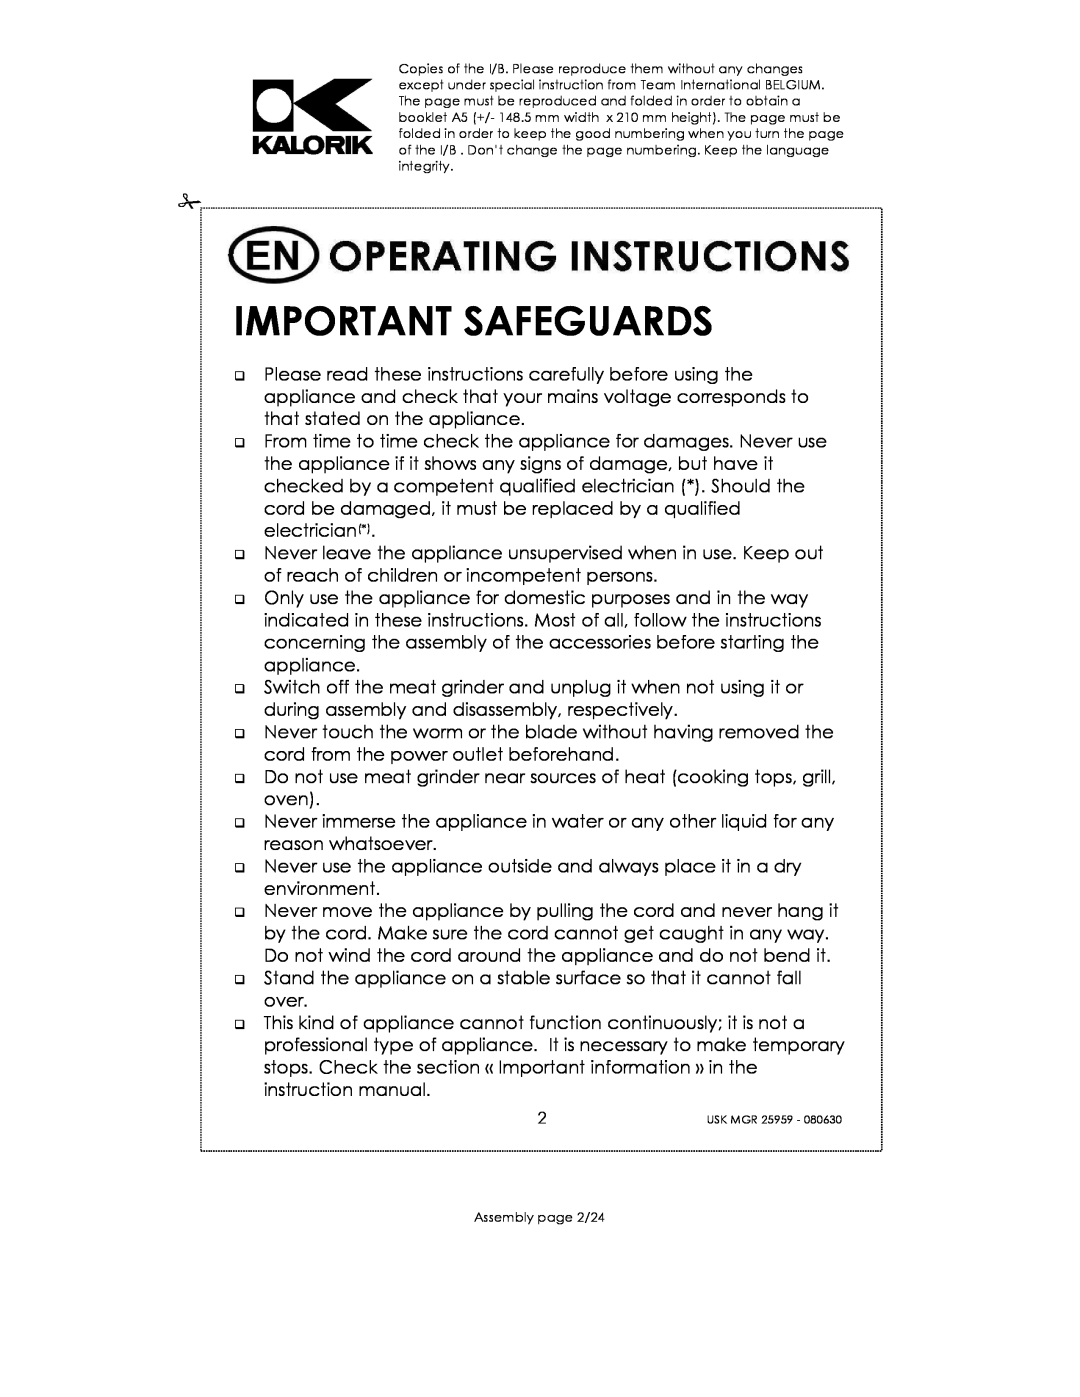 Kalorik USK MGR 25959 manual Important Safeguards, Assembly page 2/24 